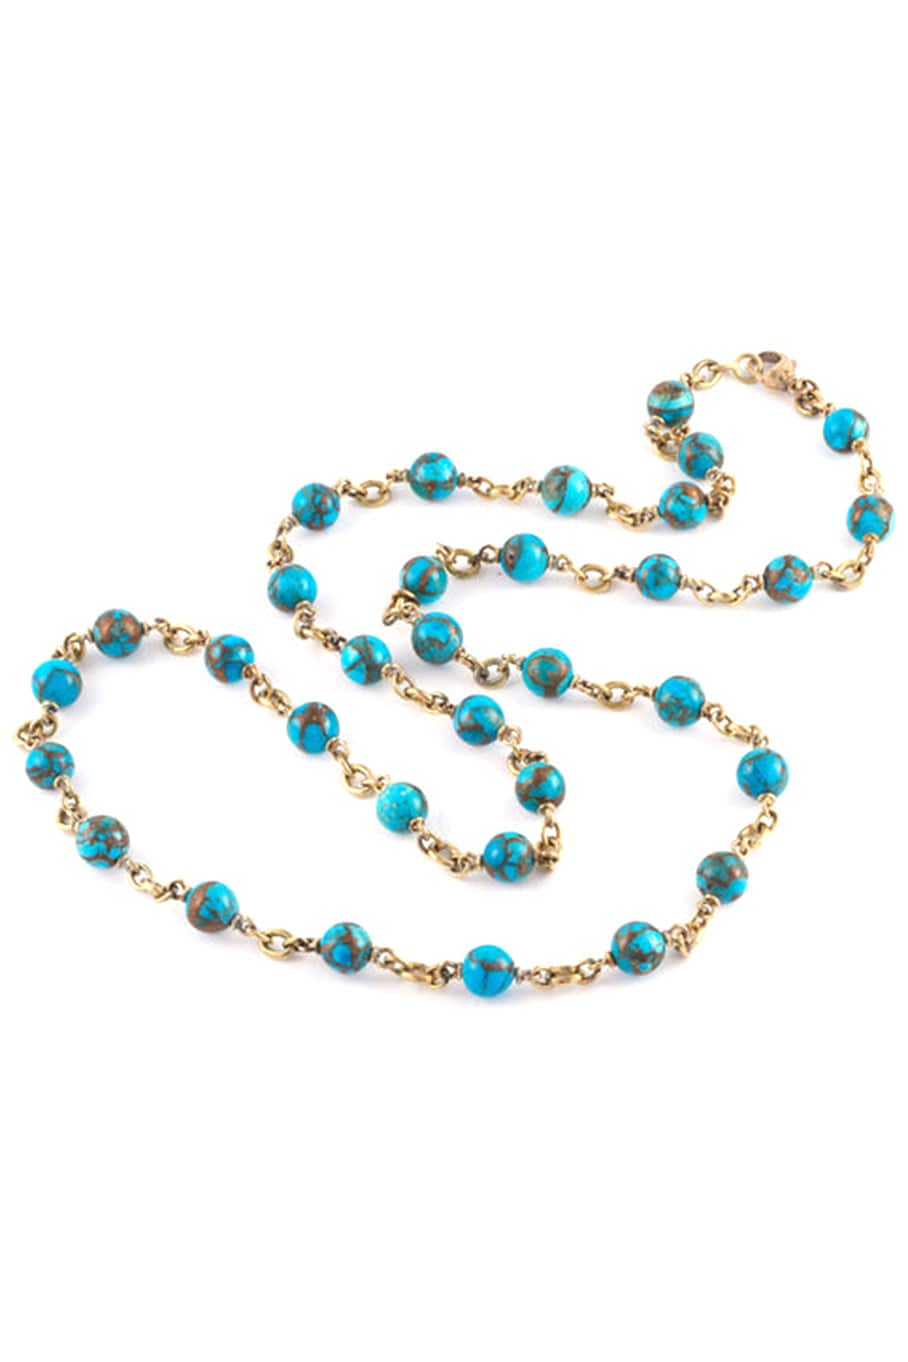 Kingman Turquoise Bead Necklace